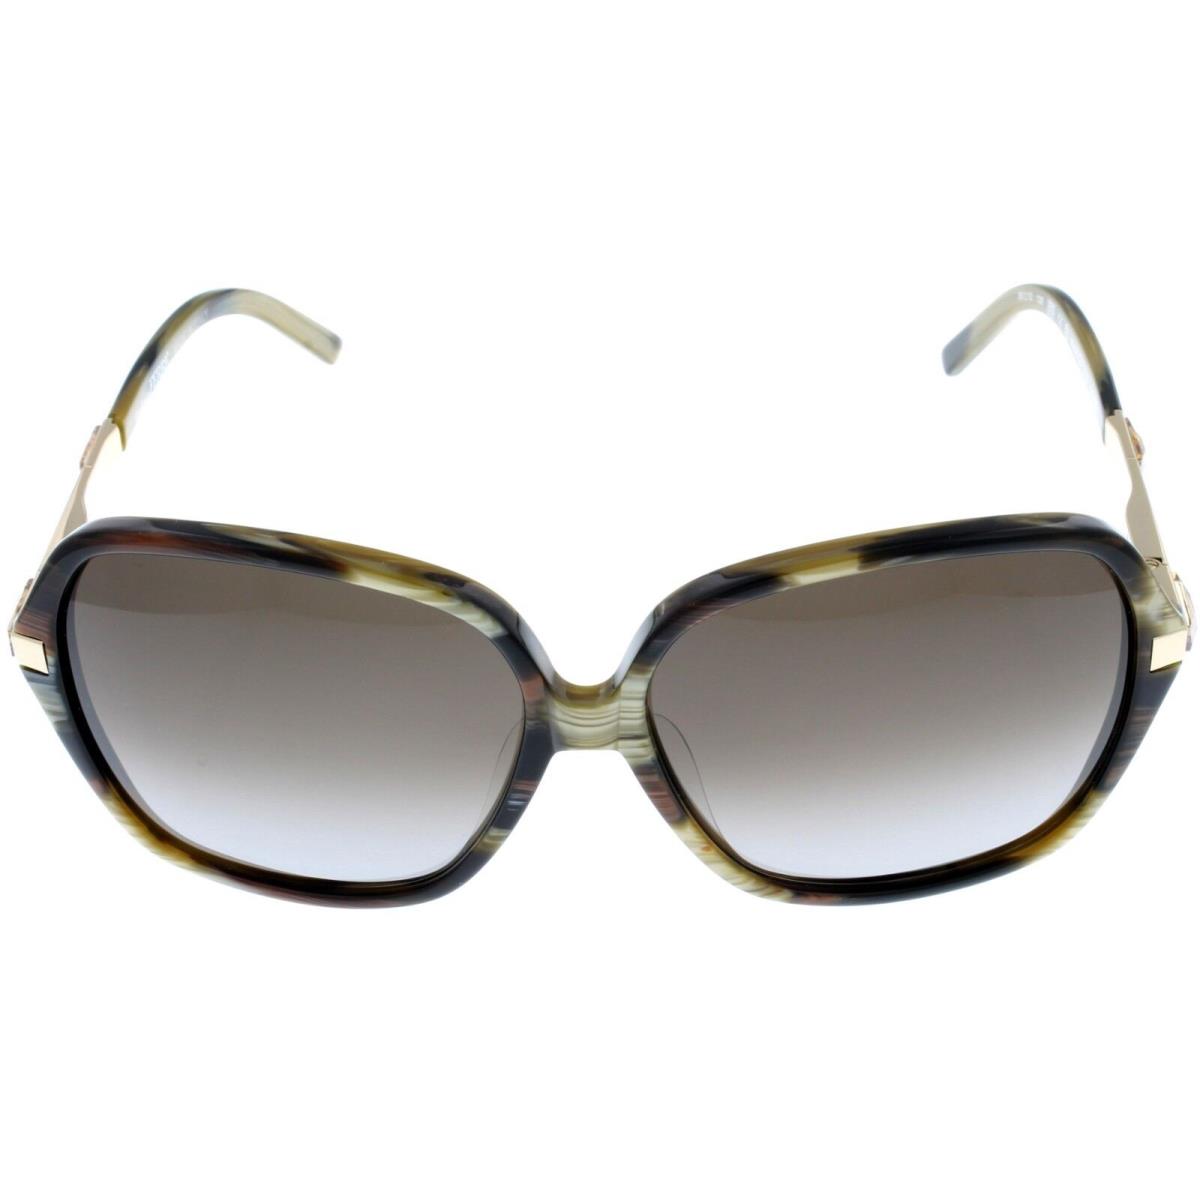 Gianfranco Ferre Sunglasses Women Brown Yellow Gold Rectangular GF910 04